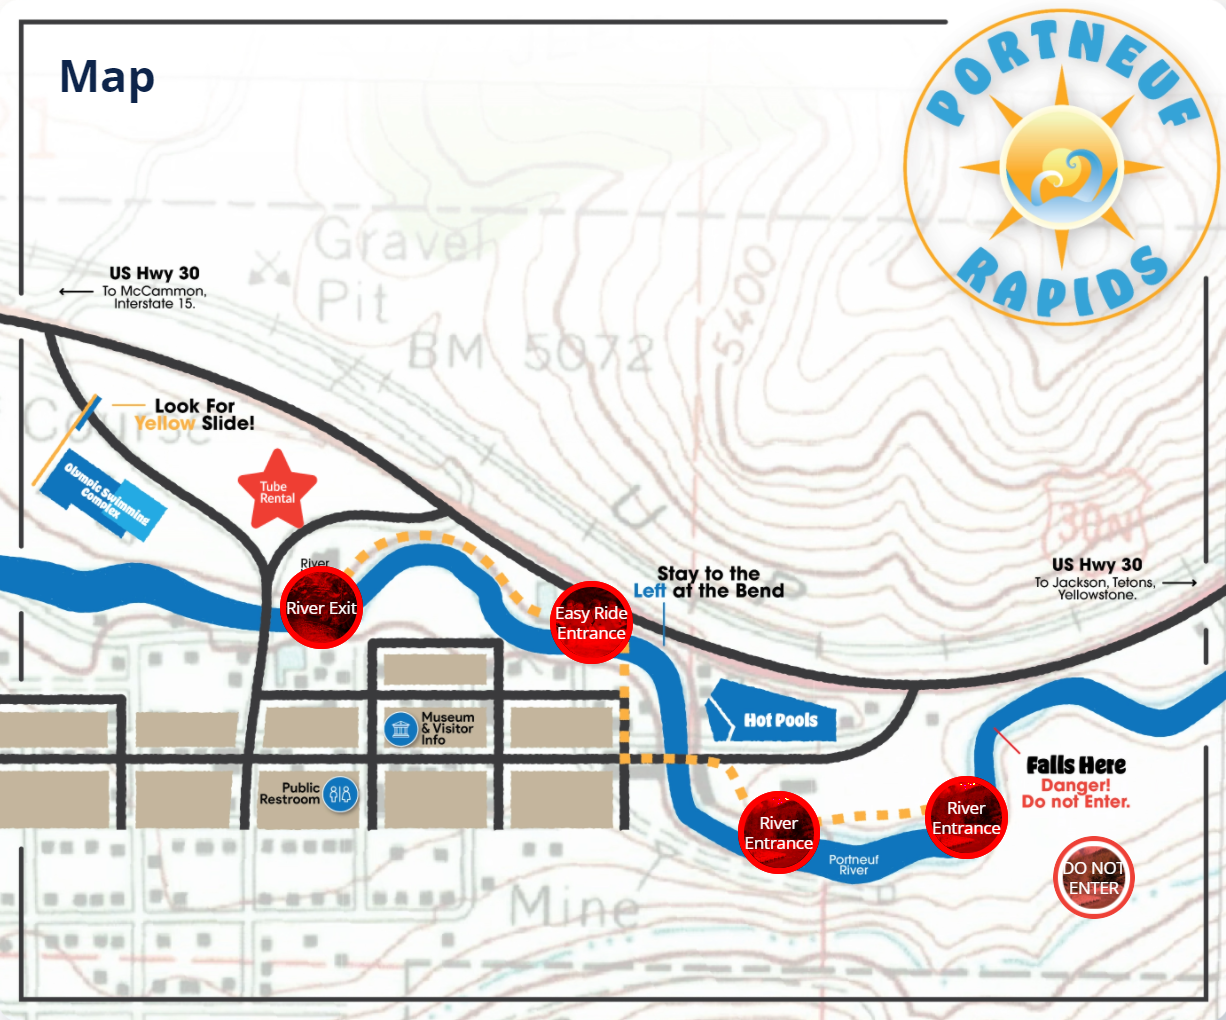 Portneuf Rapids Tube Rentals in Lava Hot Springs